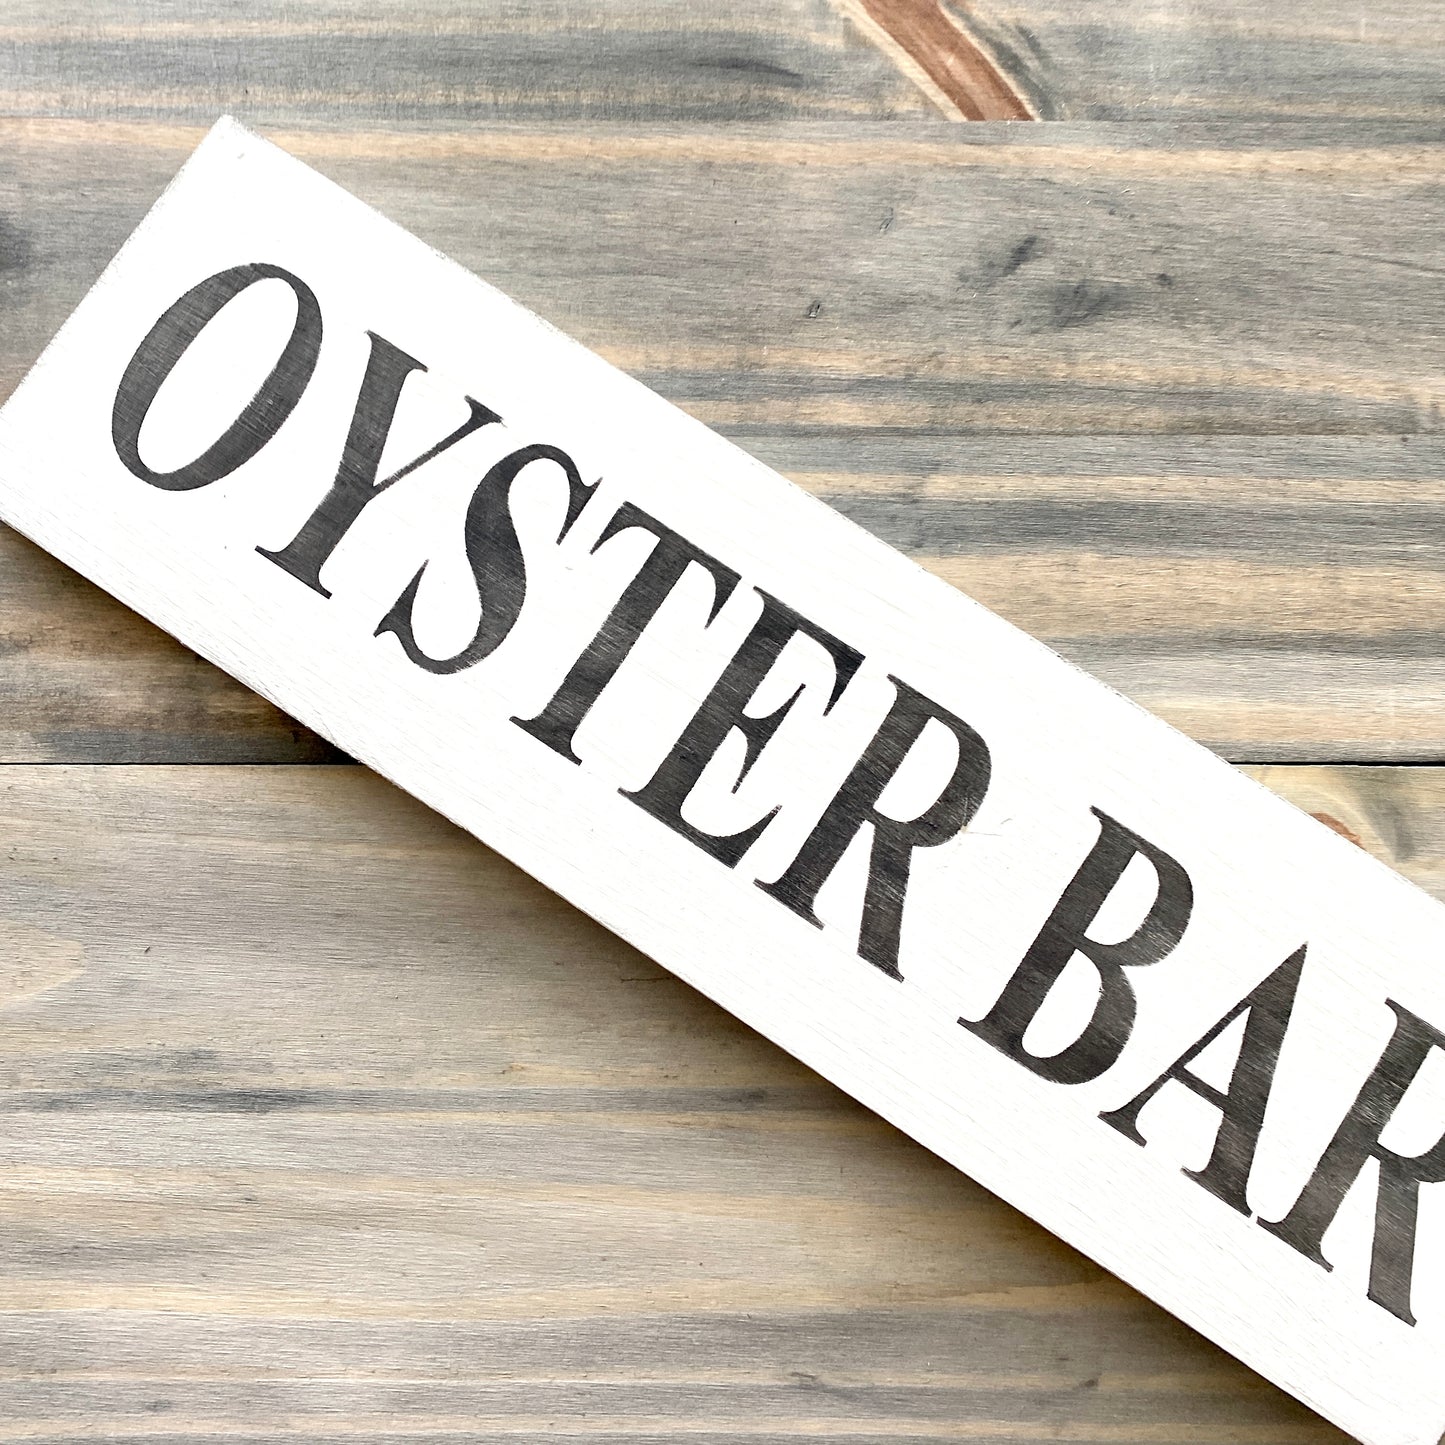 Oyster Bar Sign